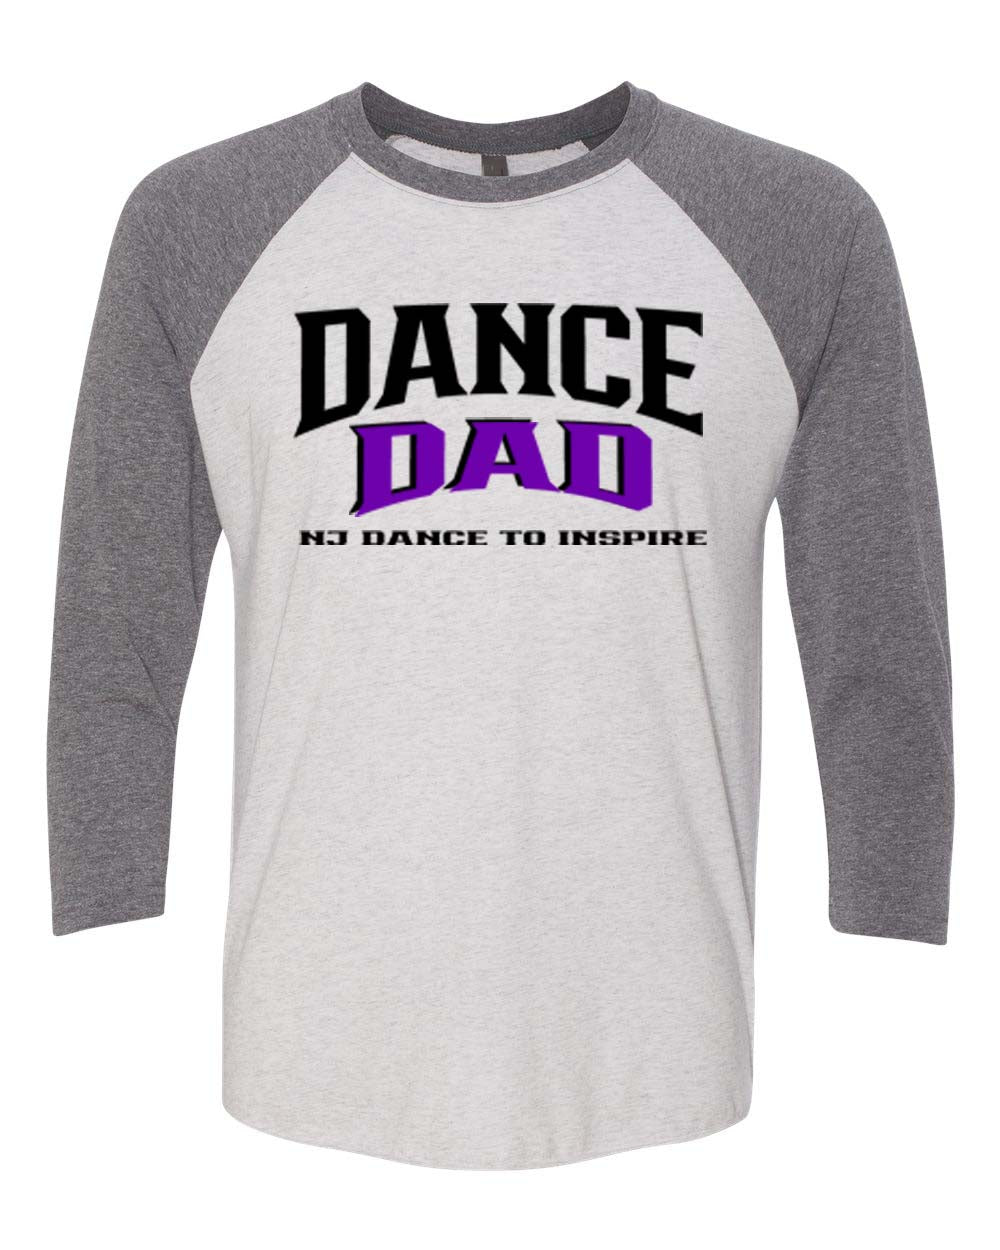 NJ Dance Design 11 raglan shirt